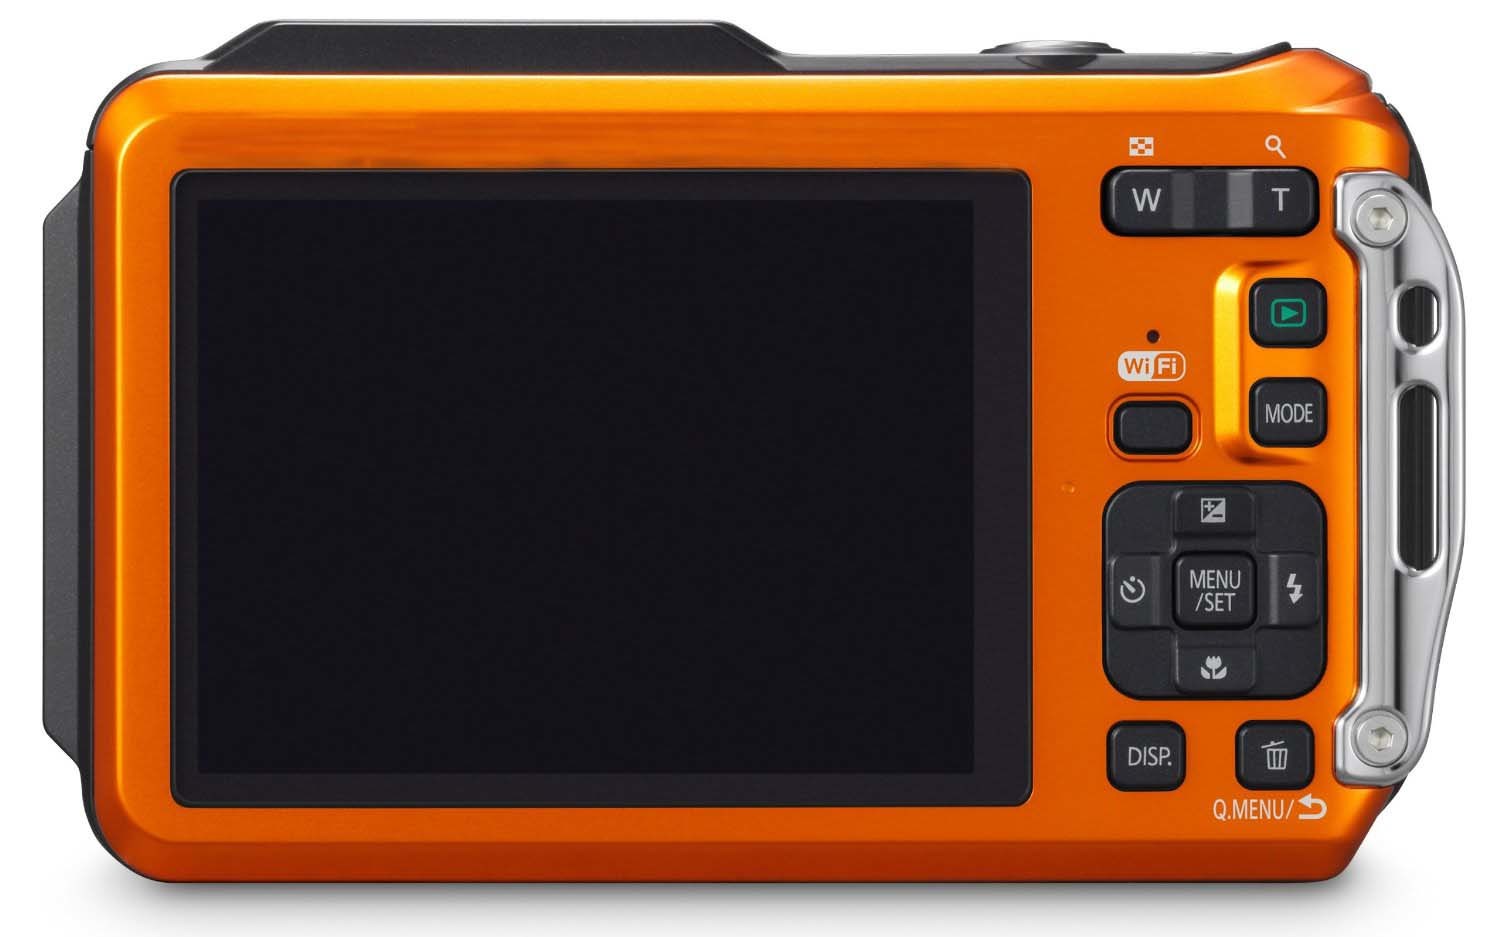 Waterproof Compact Video Camera GPS DMC-Ft5